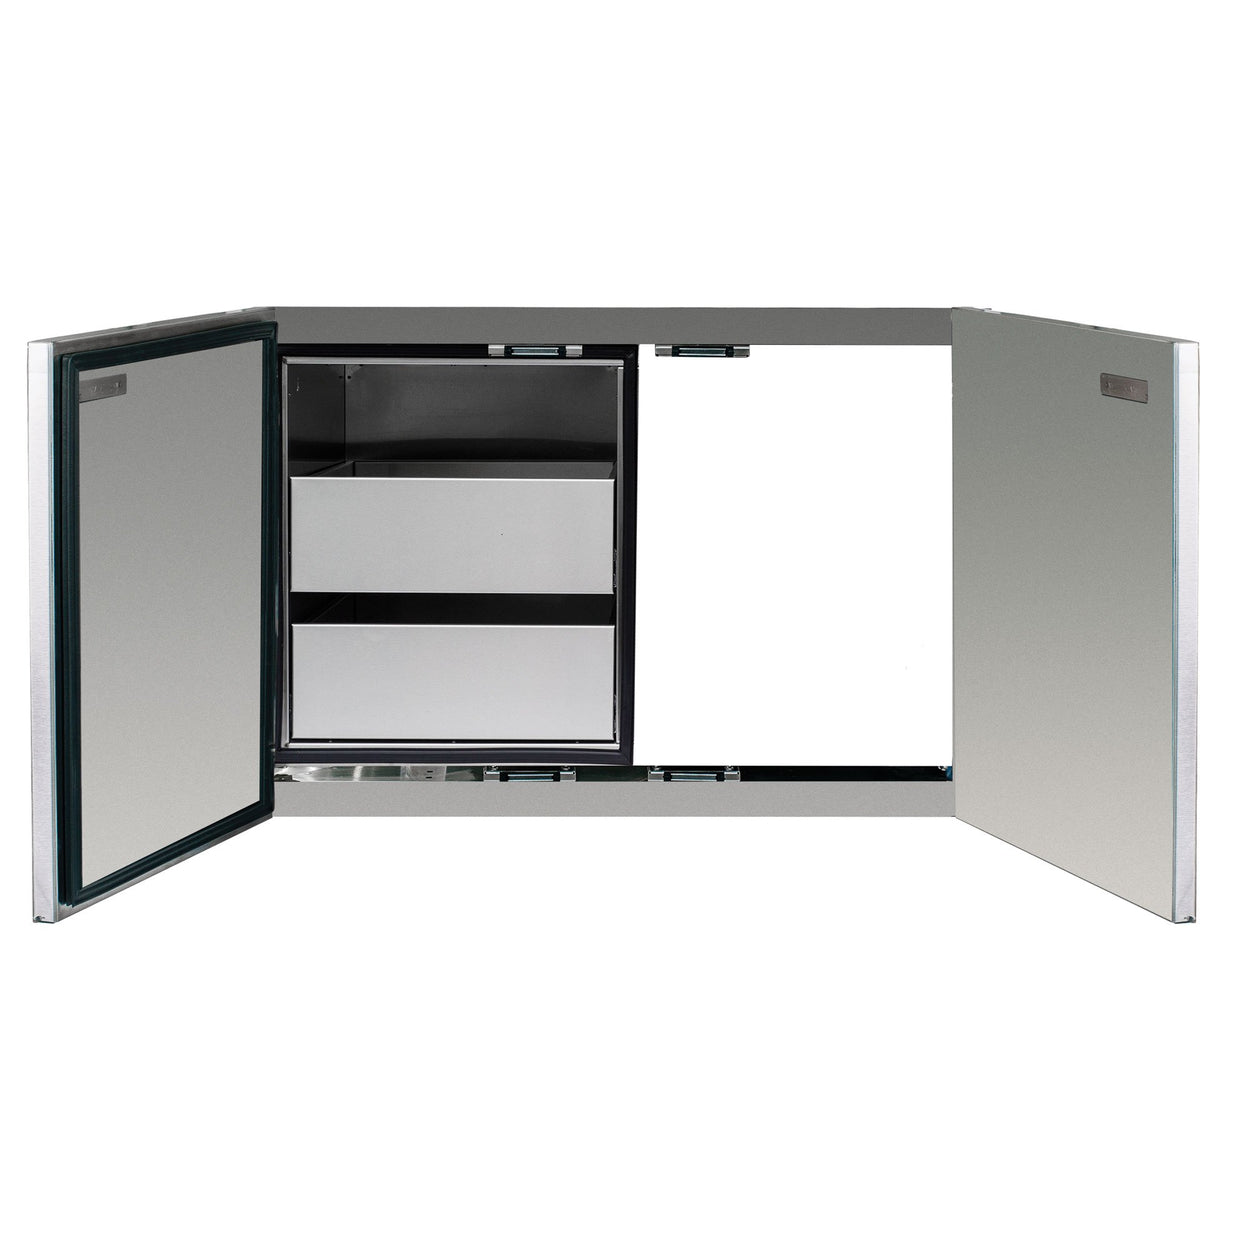 36" 2-Drawer Dry Storage Pantry & Access Door Combo